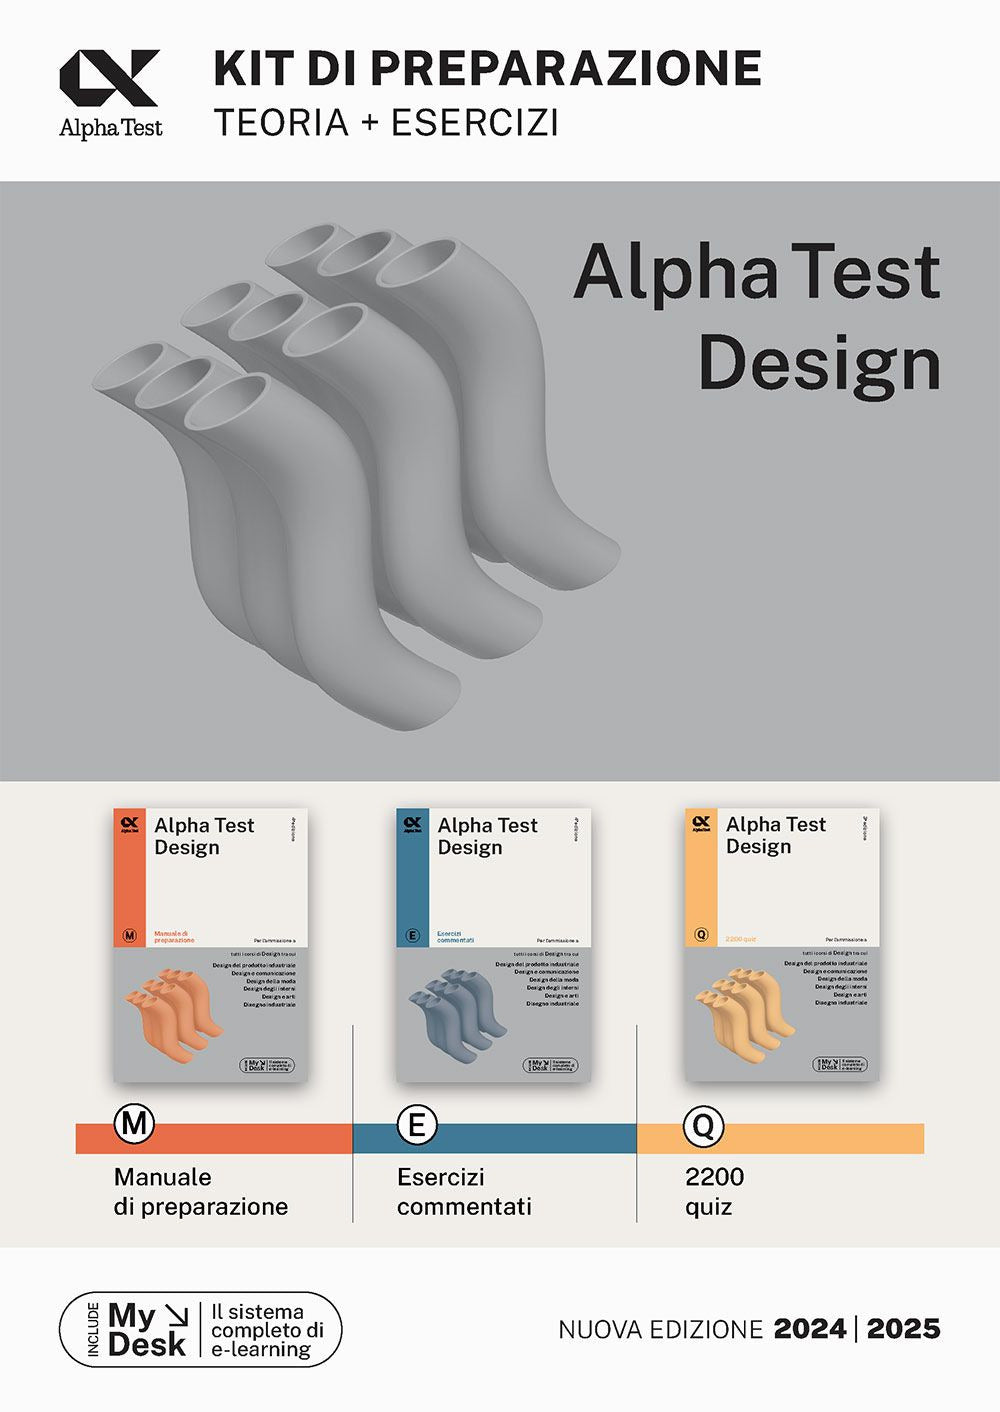 Alpha Test Design - Esercizi commentati - Design - Alpha Test